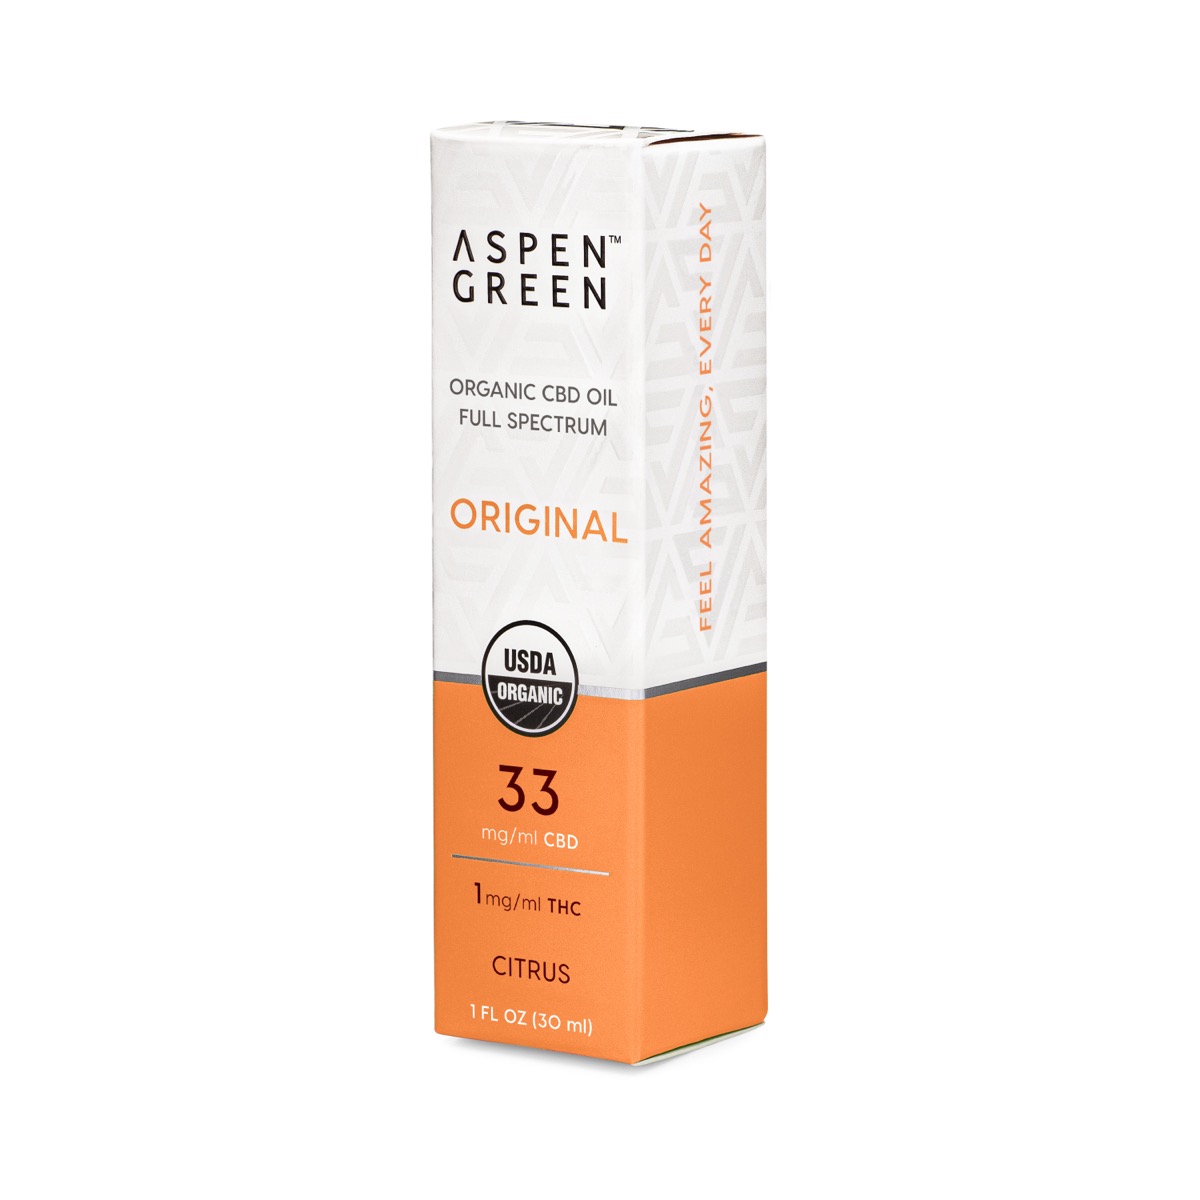 Aspen Green Original CBD Oil Box - USDA Certified Organic, 33mg/ml CBD, Citrus Flavor